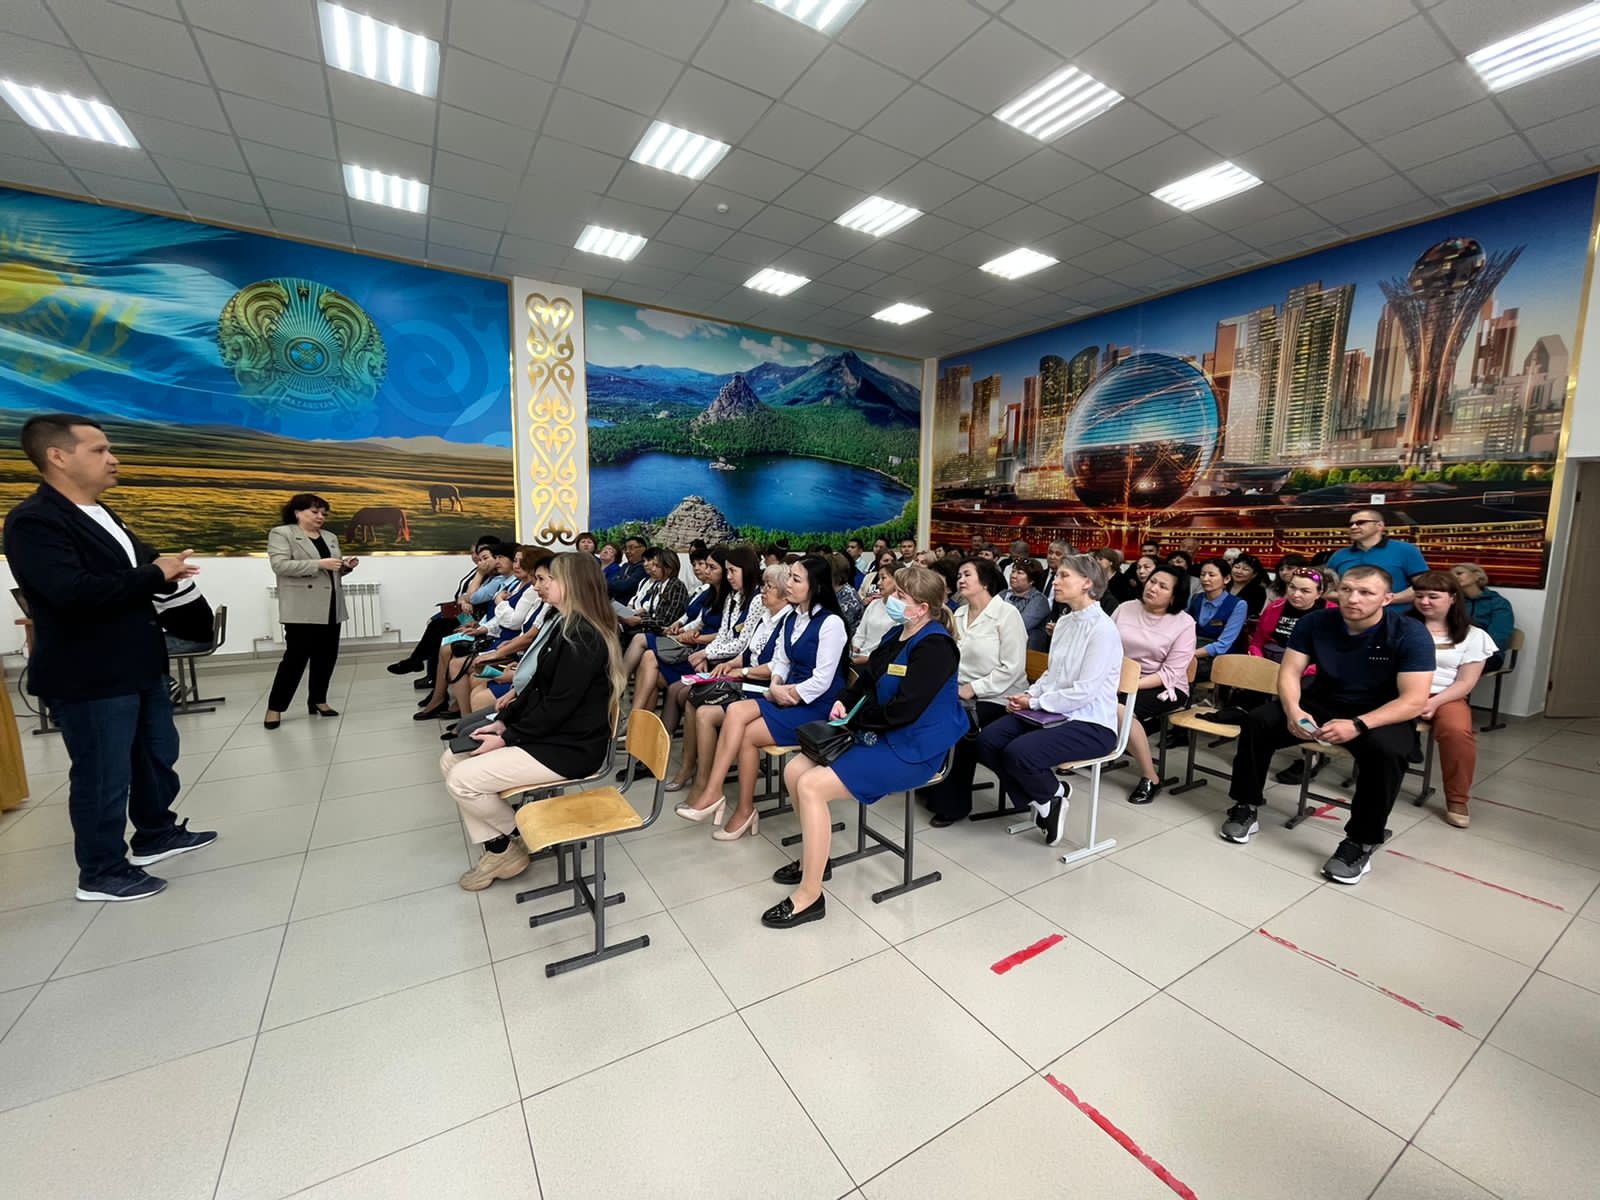 Встречи депутата Мажилиса Парламента РК М.С.Елюбаева с жителями Акмолинской области